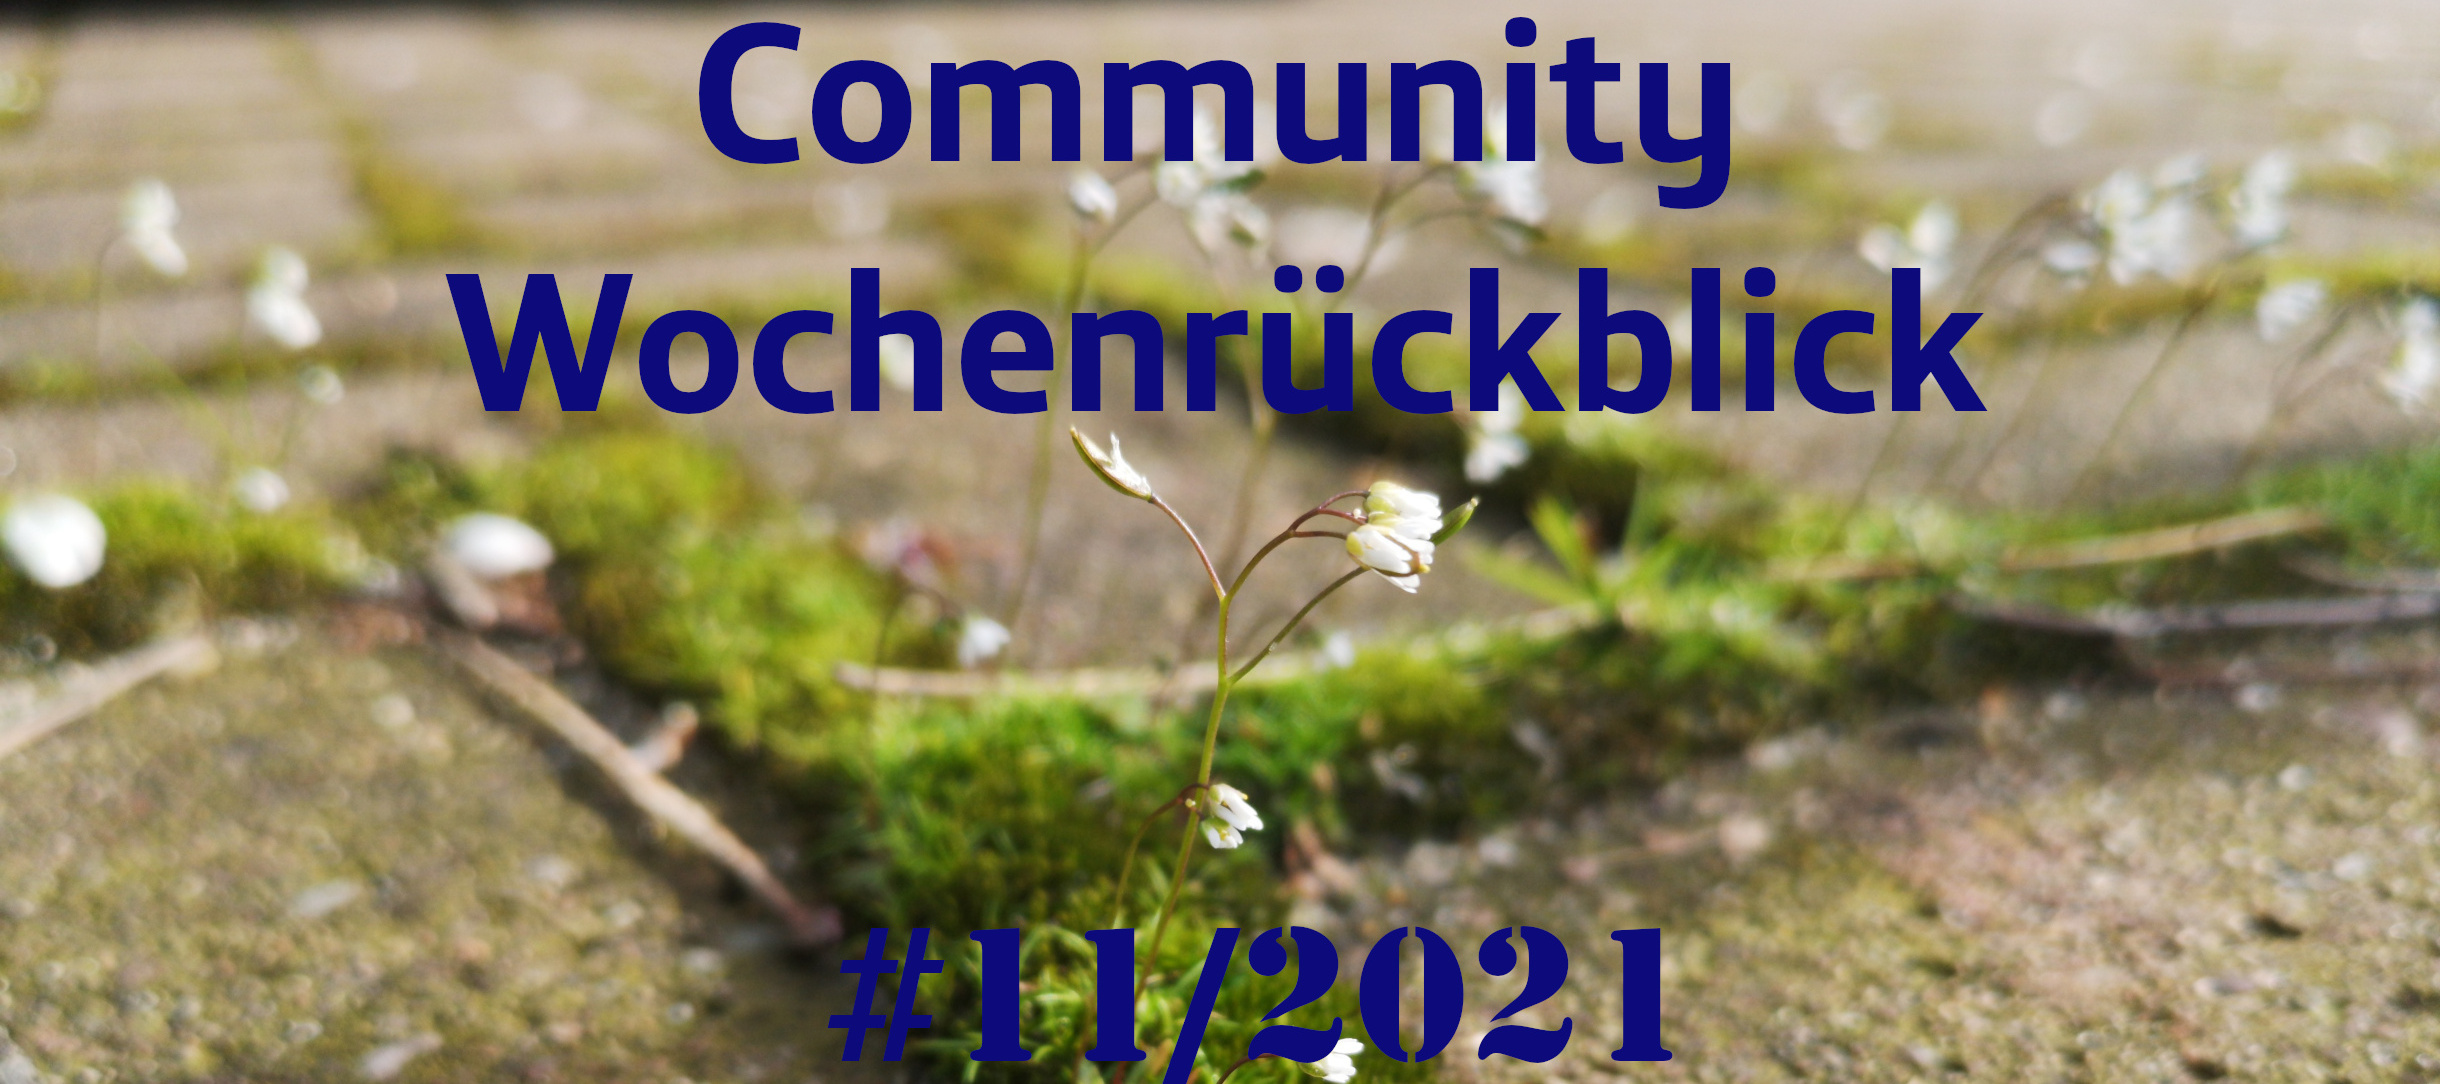 Community Wochenrückblick #11/2021